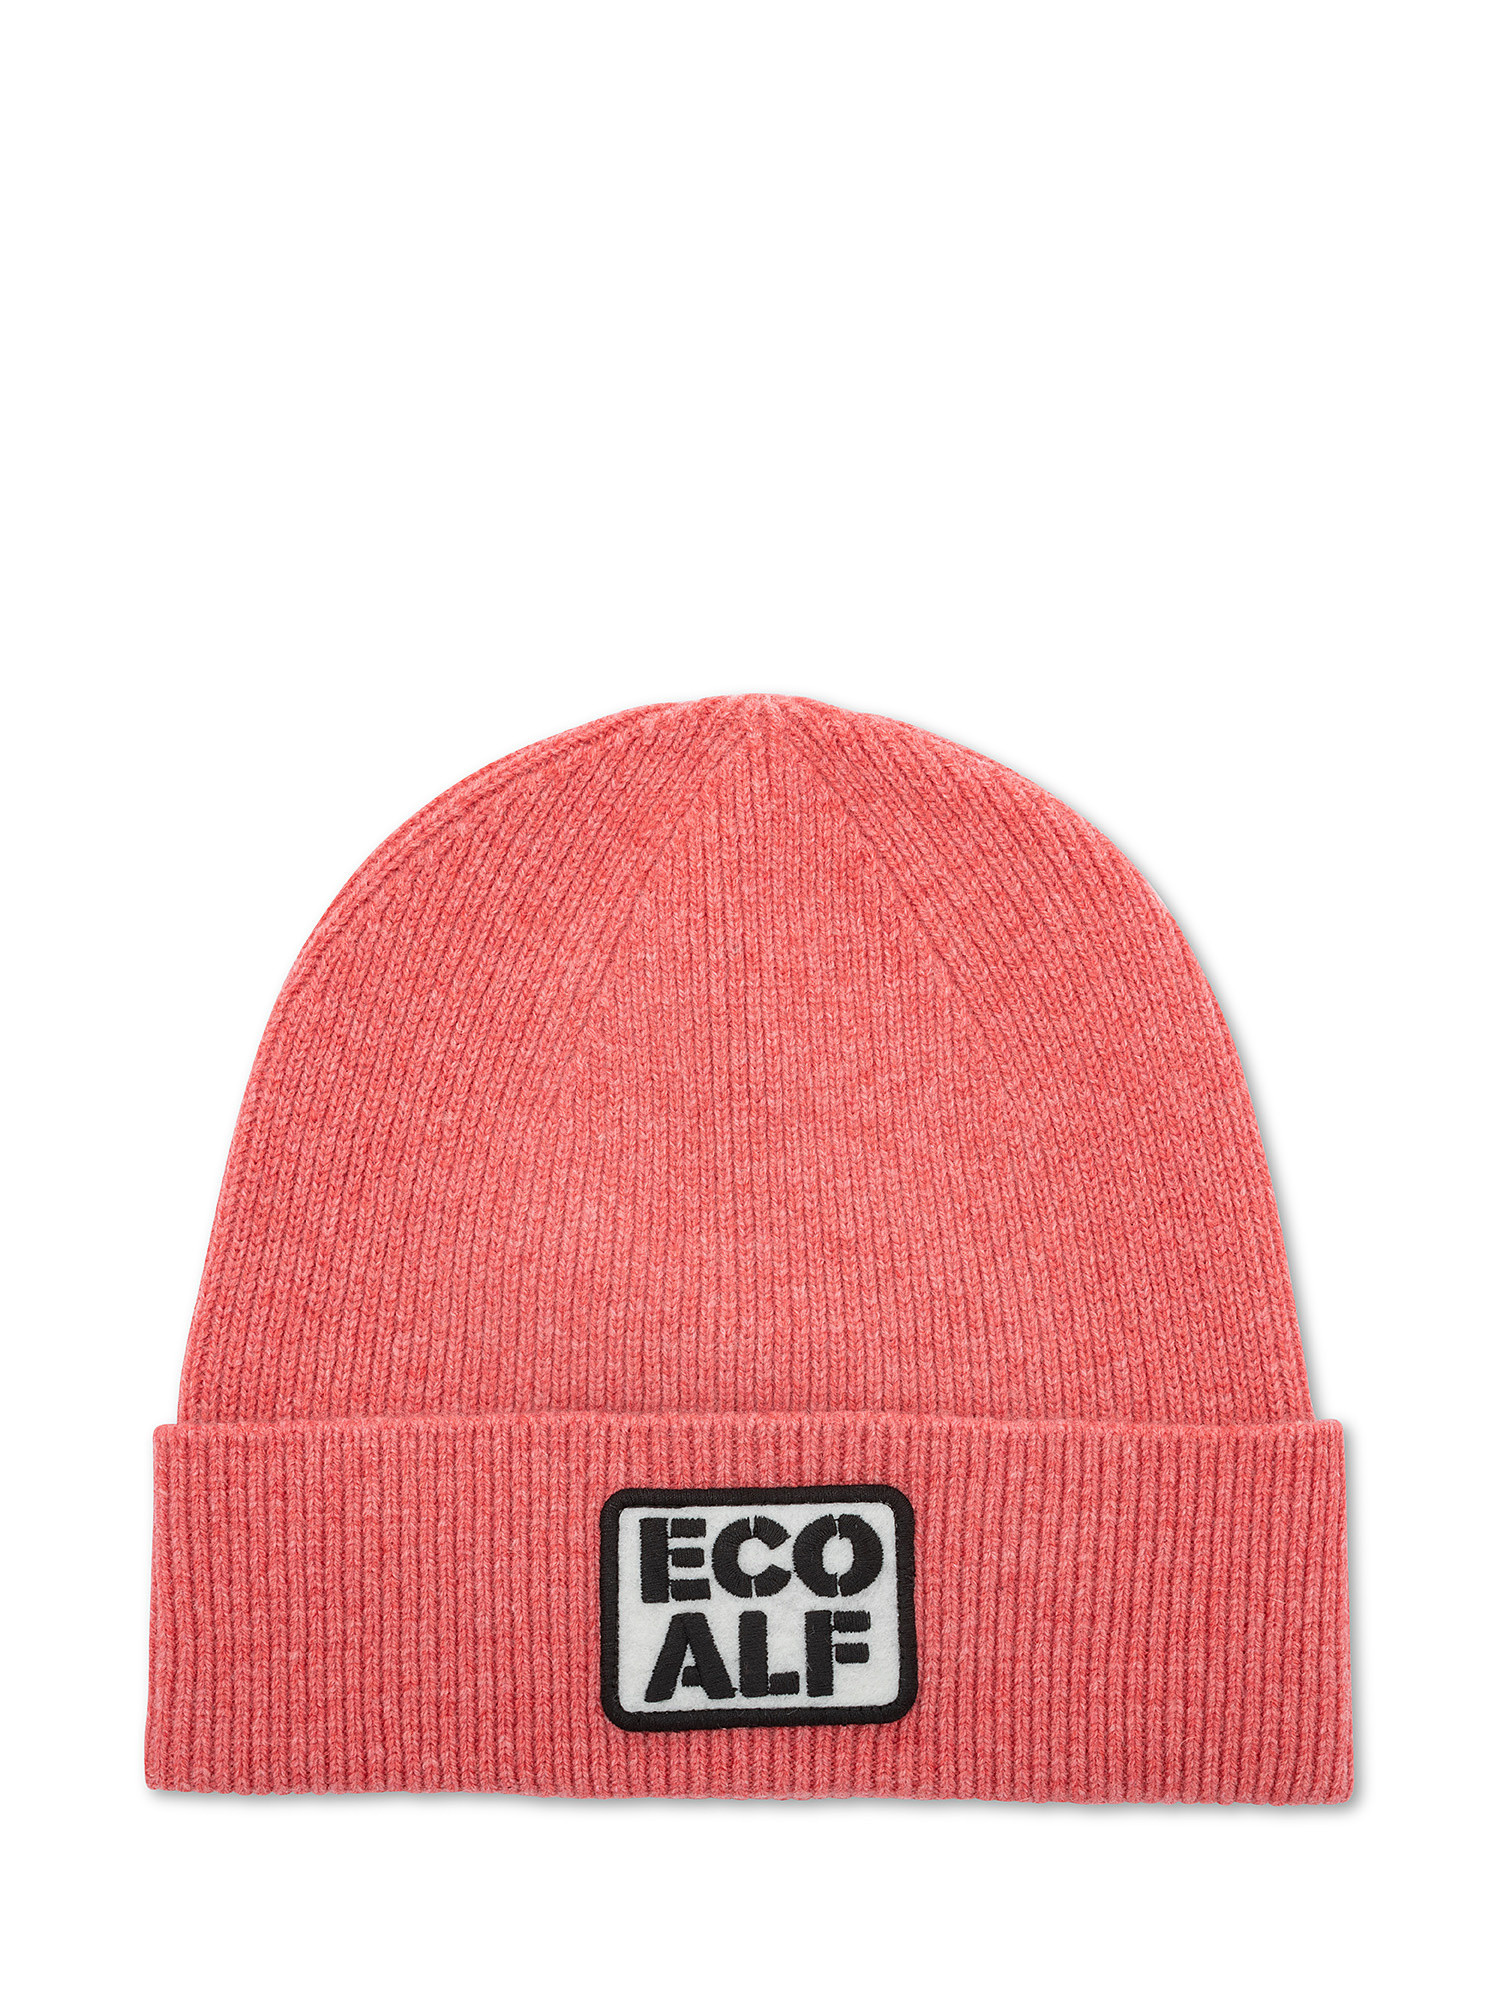 Ecoalf - Hat with logo, Dark Pink, large image number 0